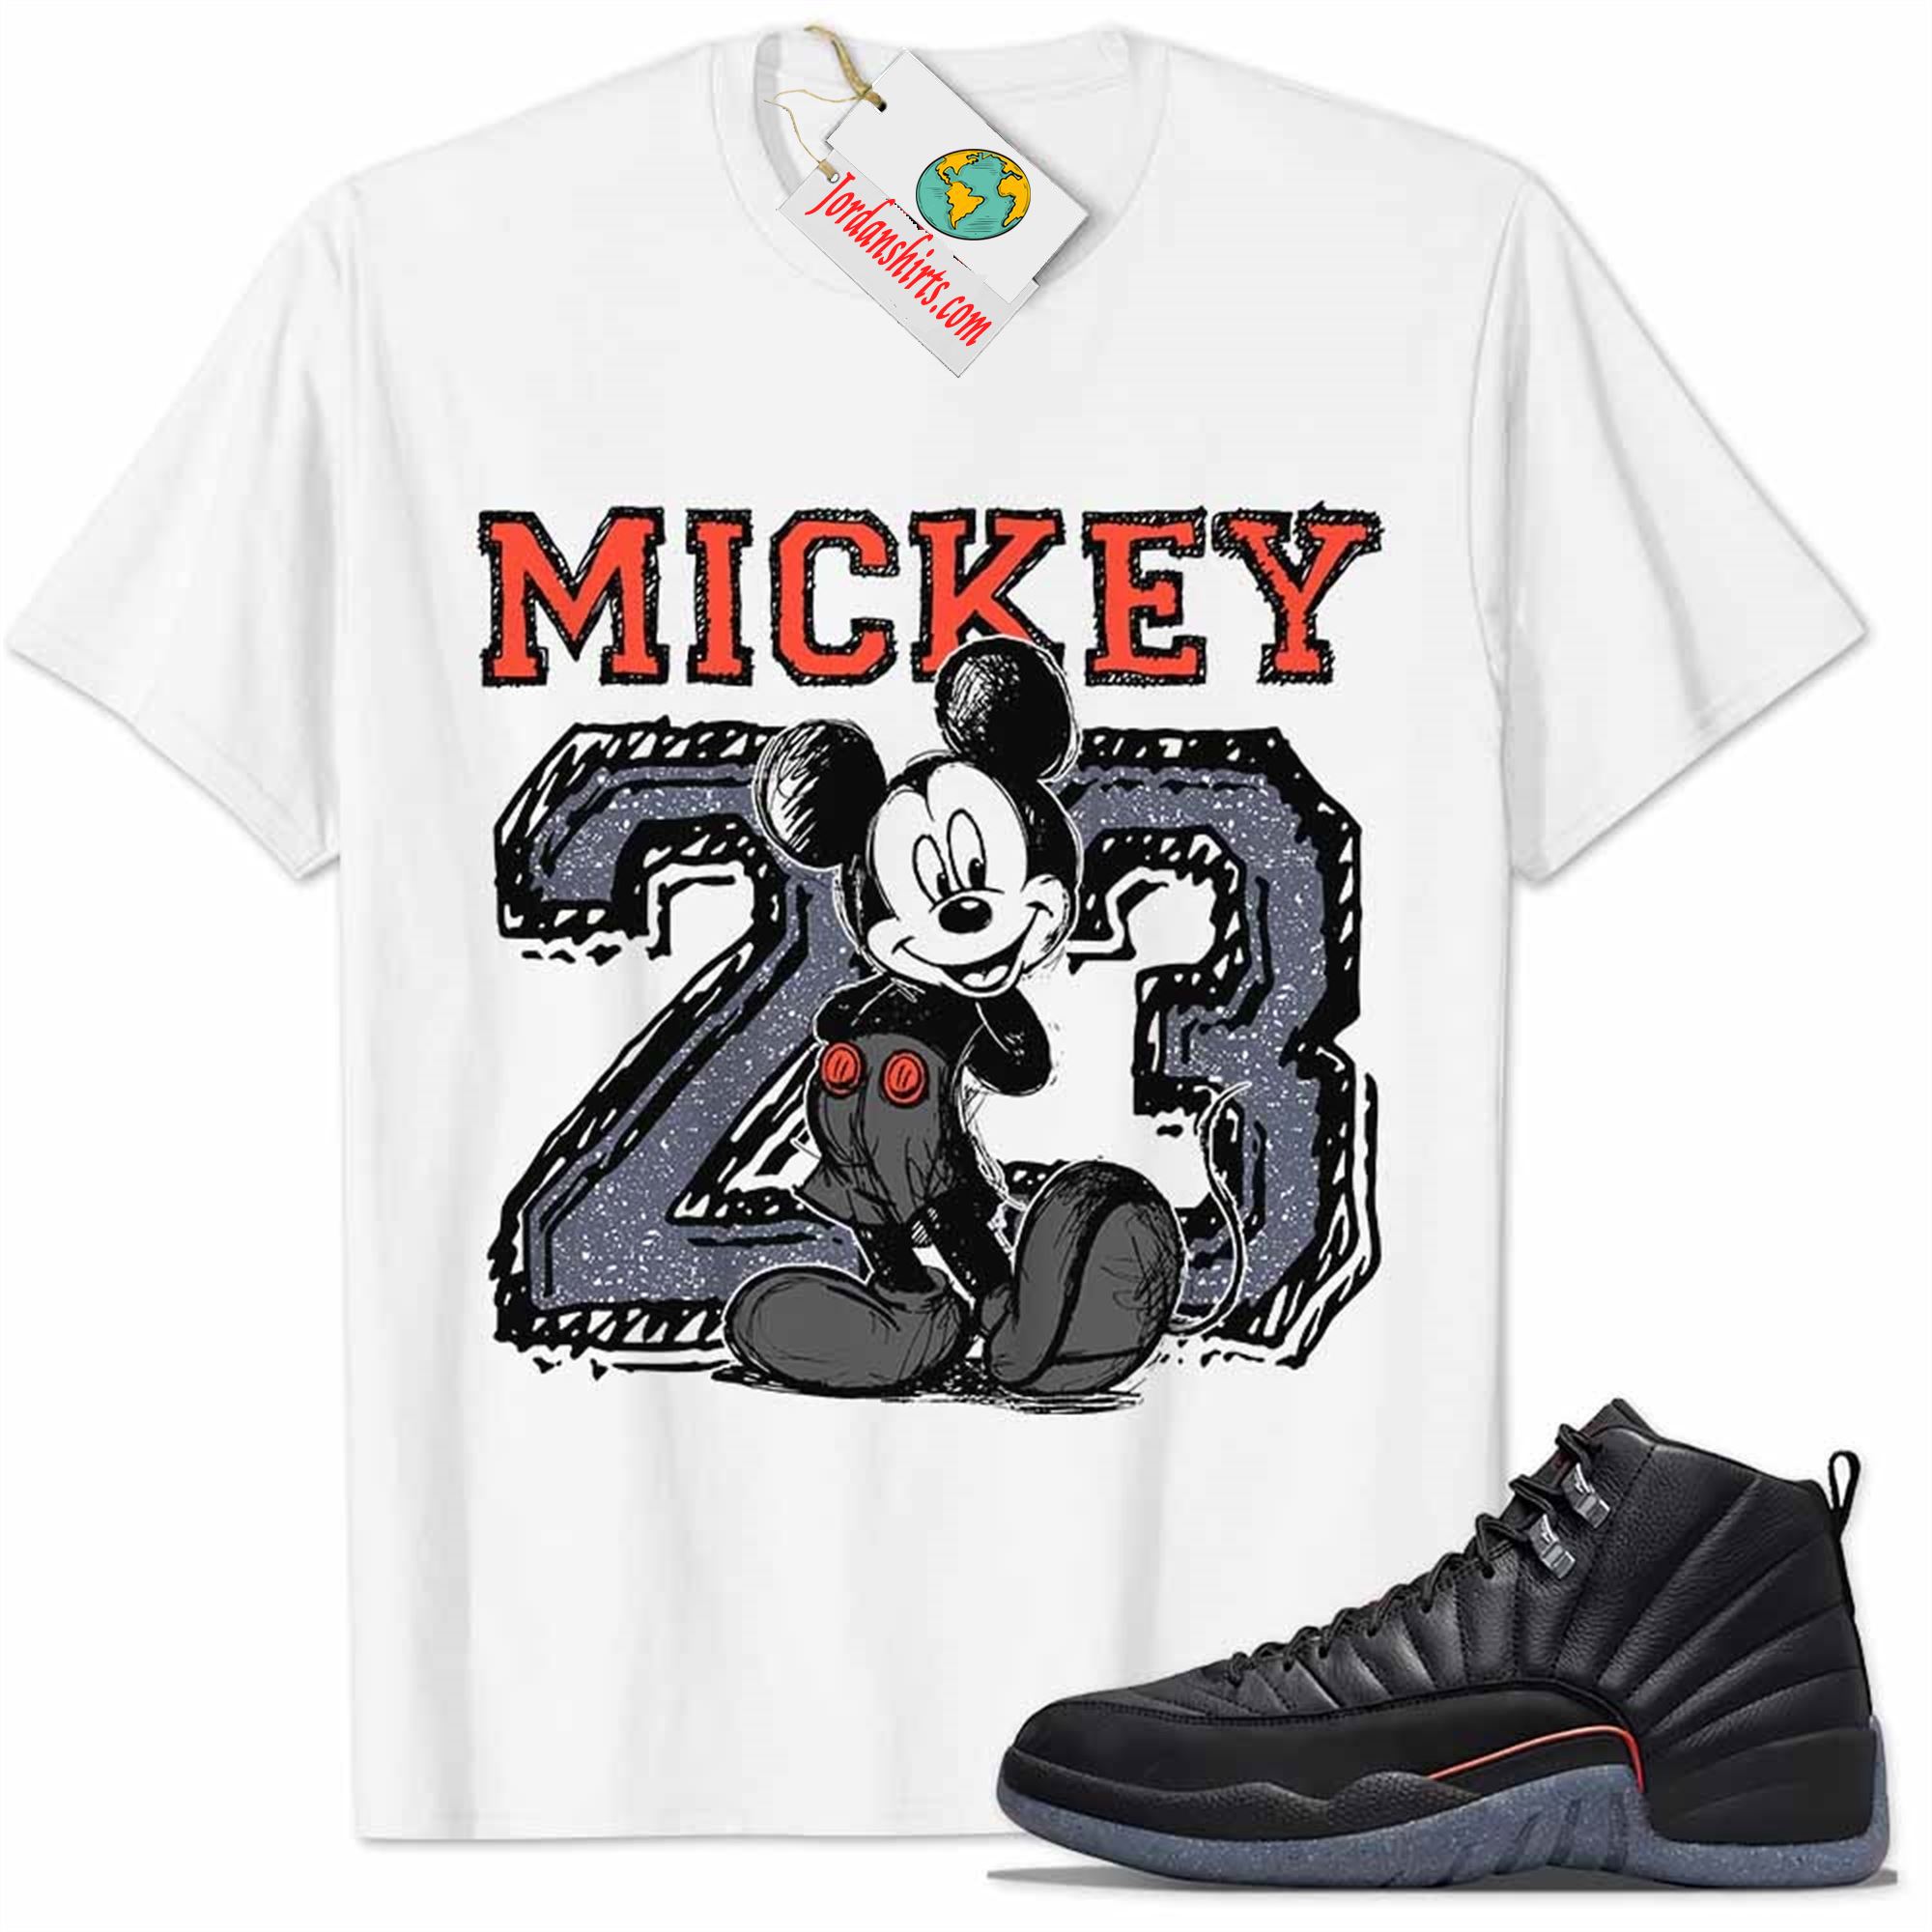 Jordan 12 Shirt, Mickey 23 Michael Jordan Number Draw White Air Jordan 12 Utility Grind 12s Full Size Up To 5xl